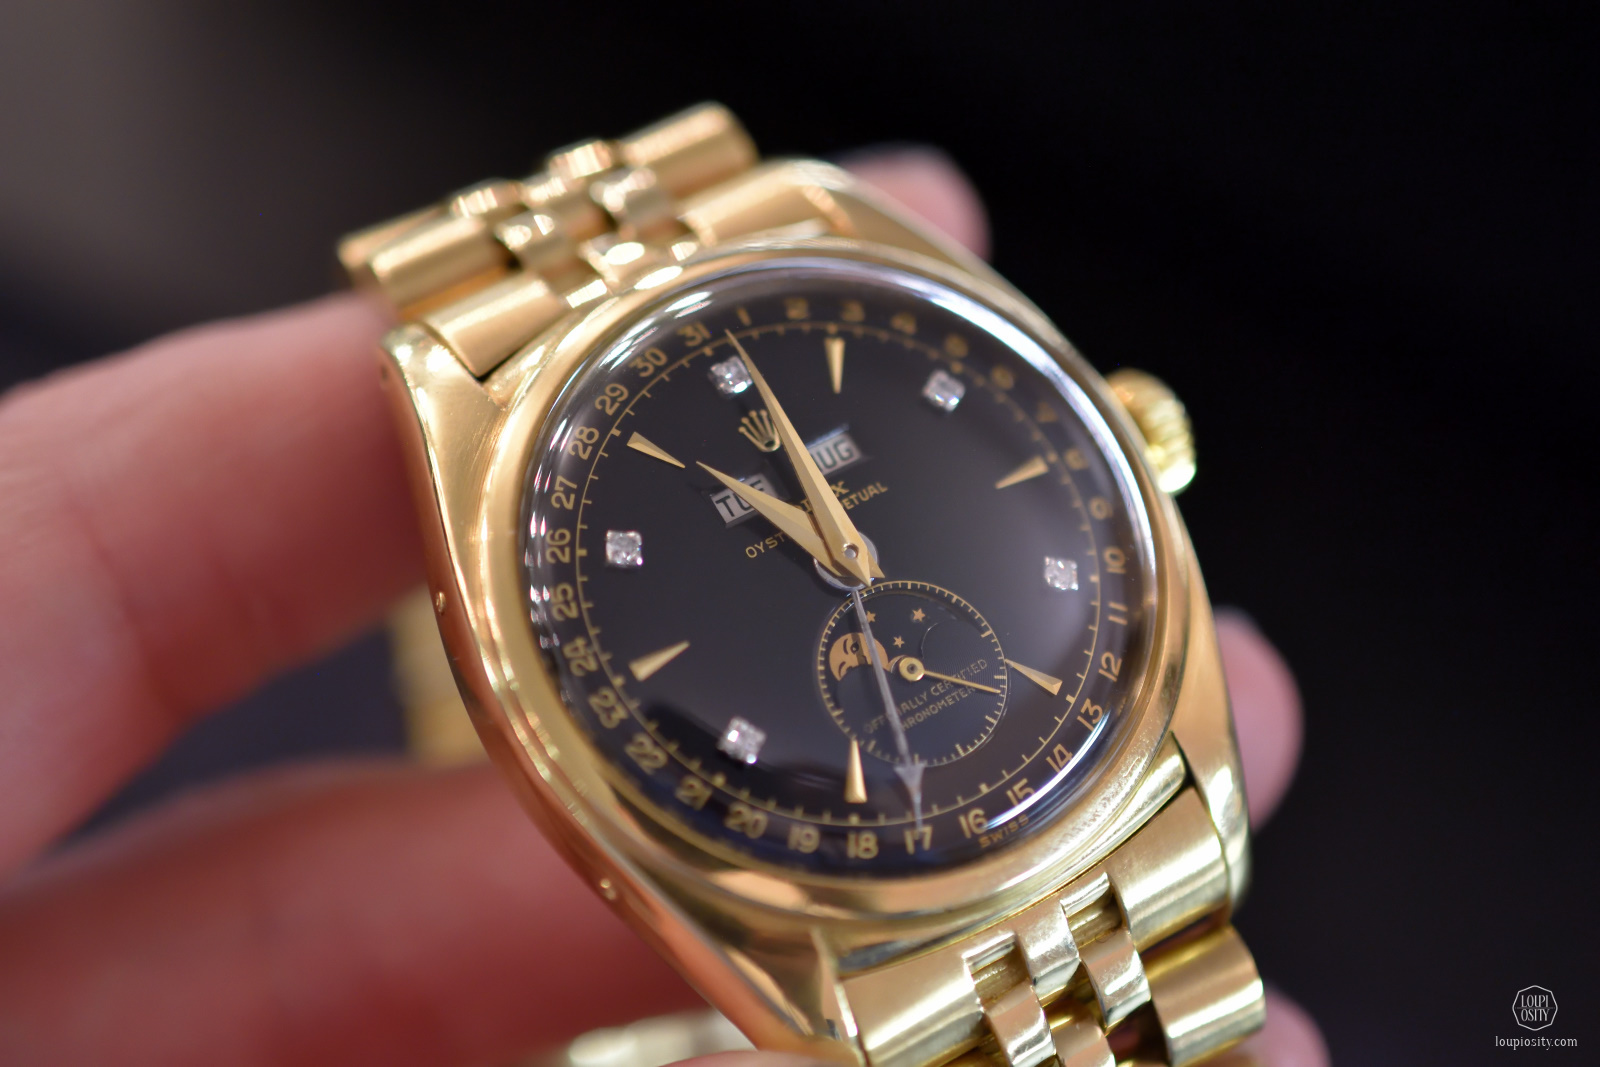 Phillips Geneva Watch Auction: Five - Rolex - Loupiosity.com